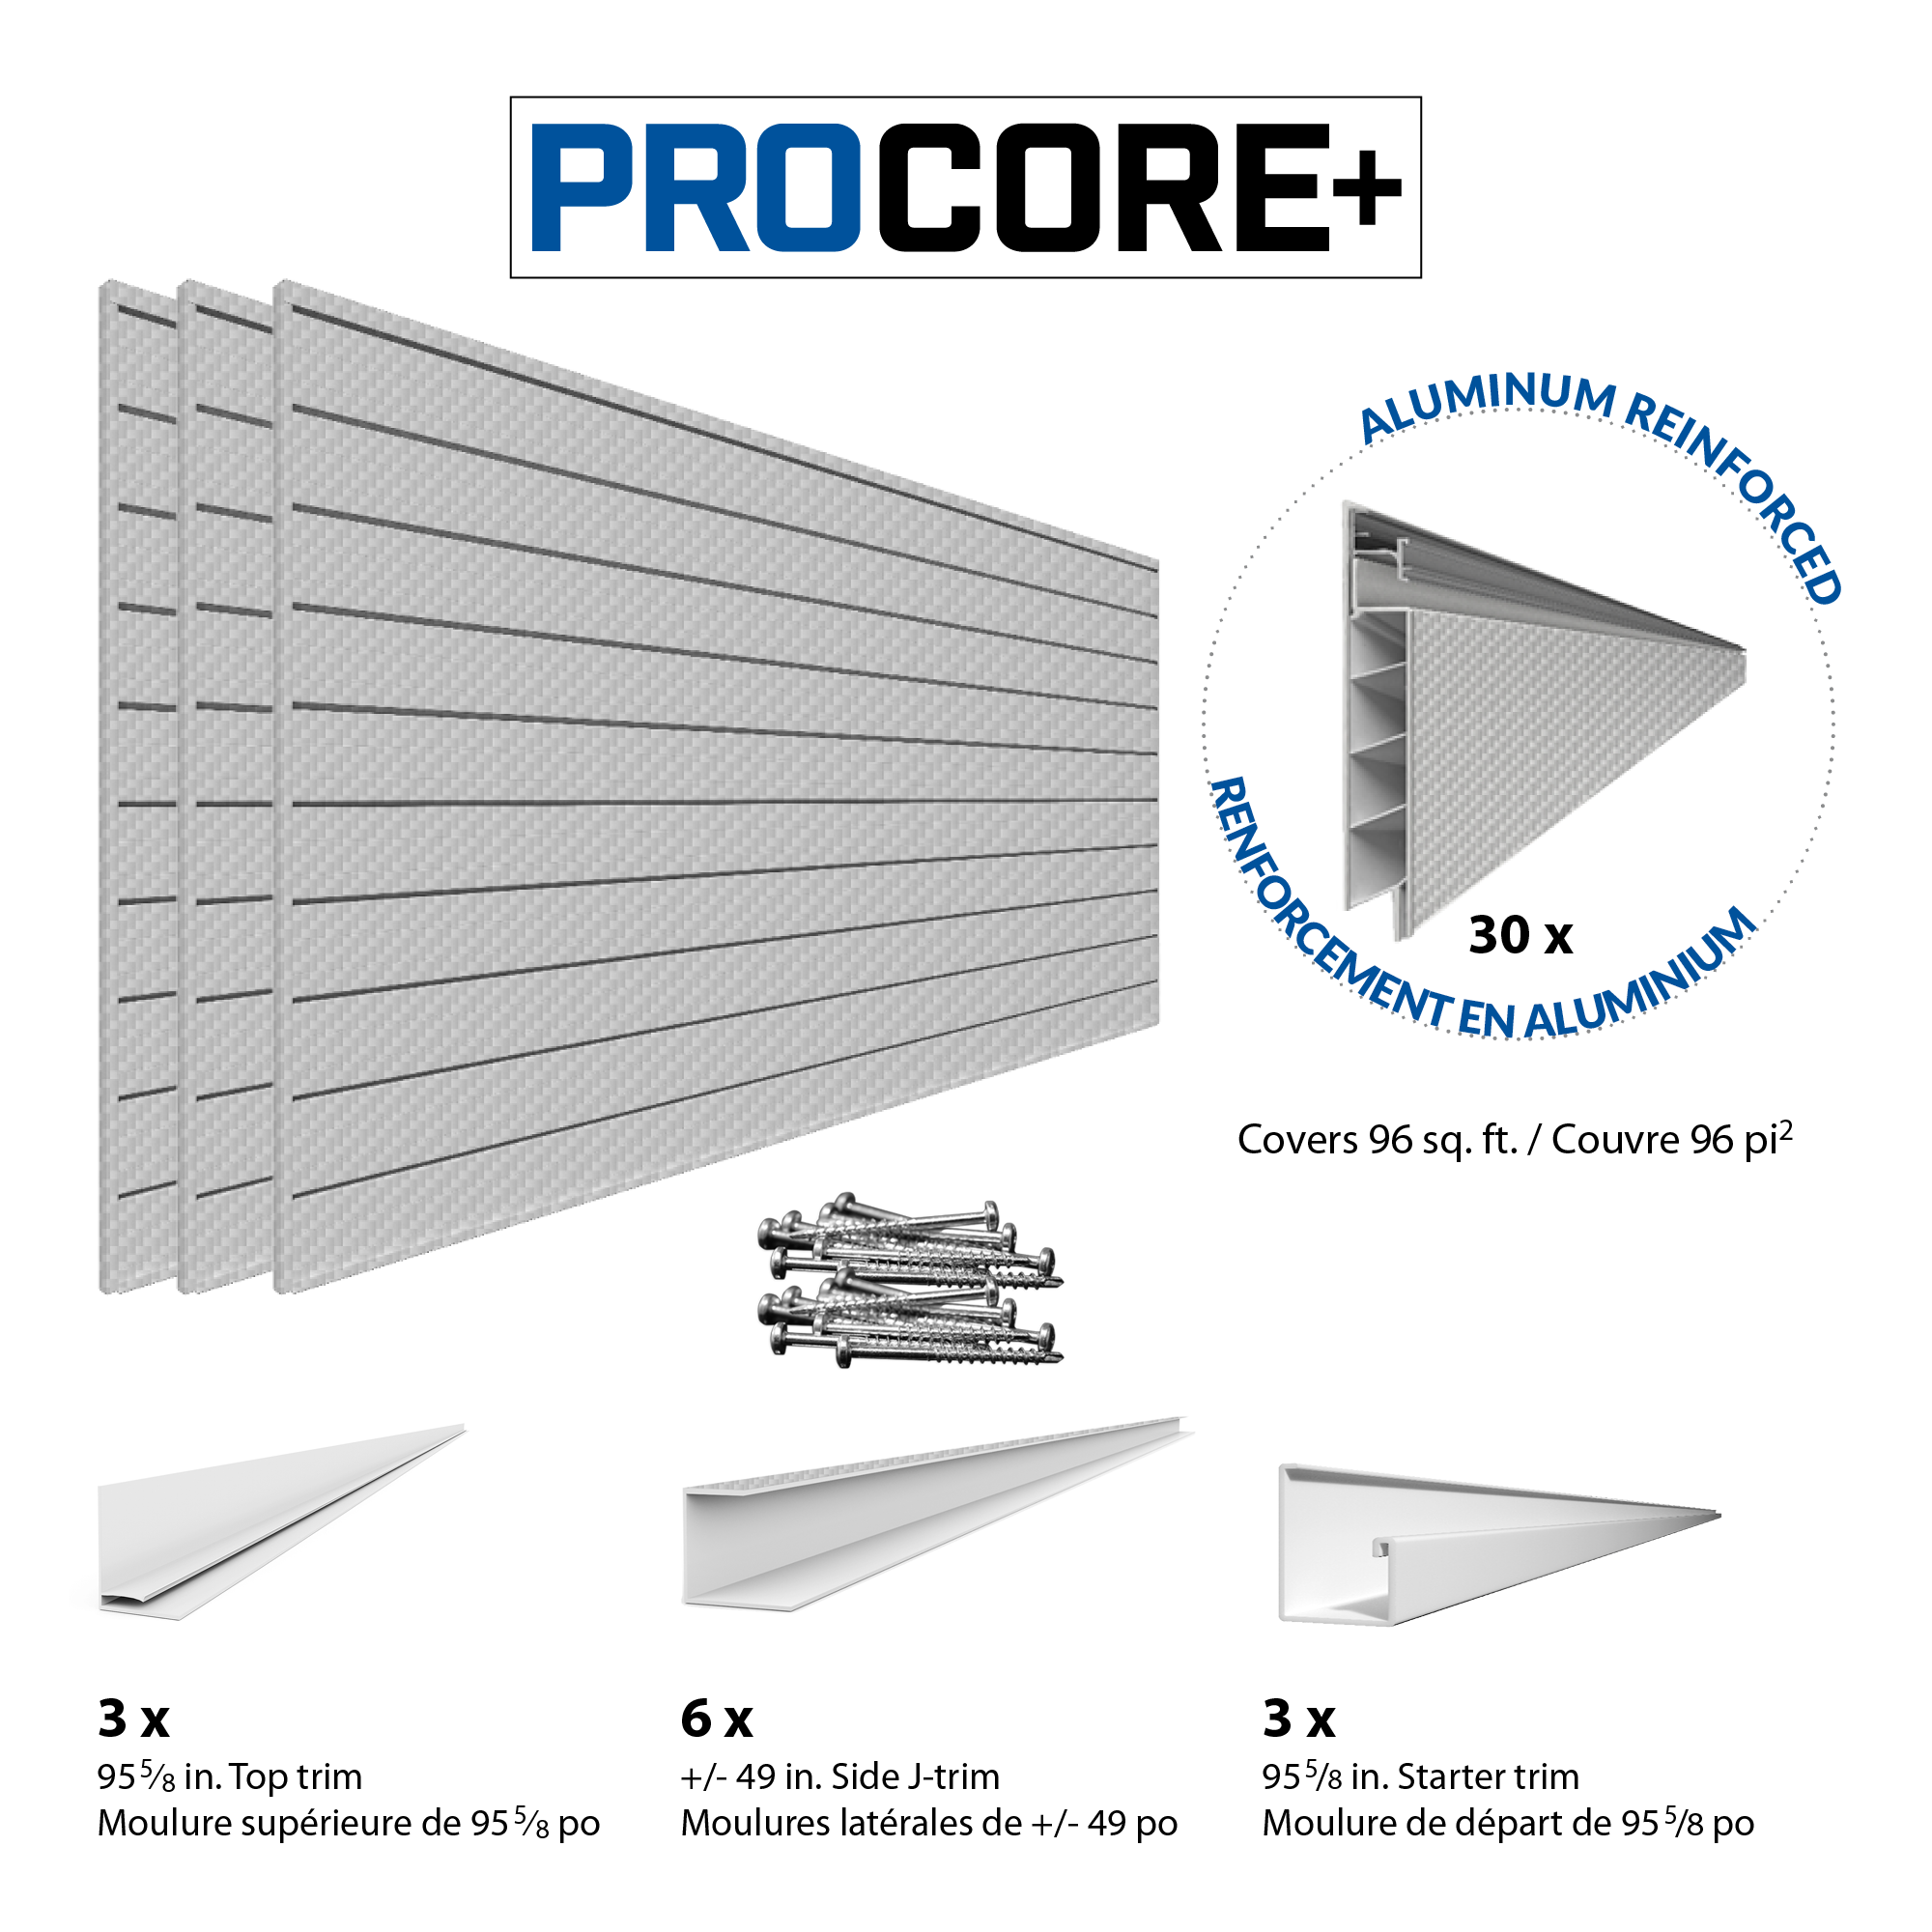 4 x 8 ft. PROCORE+ Silver Gray Carbon Fiber PVC Slatwall – 3 Pack 96 sq ft